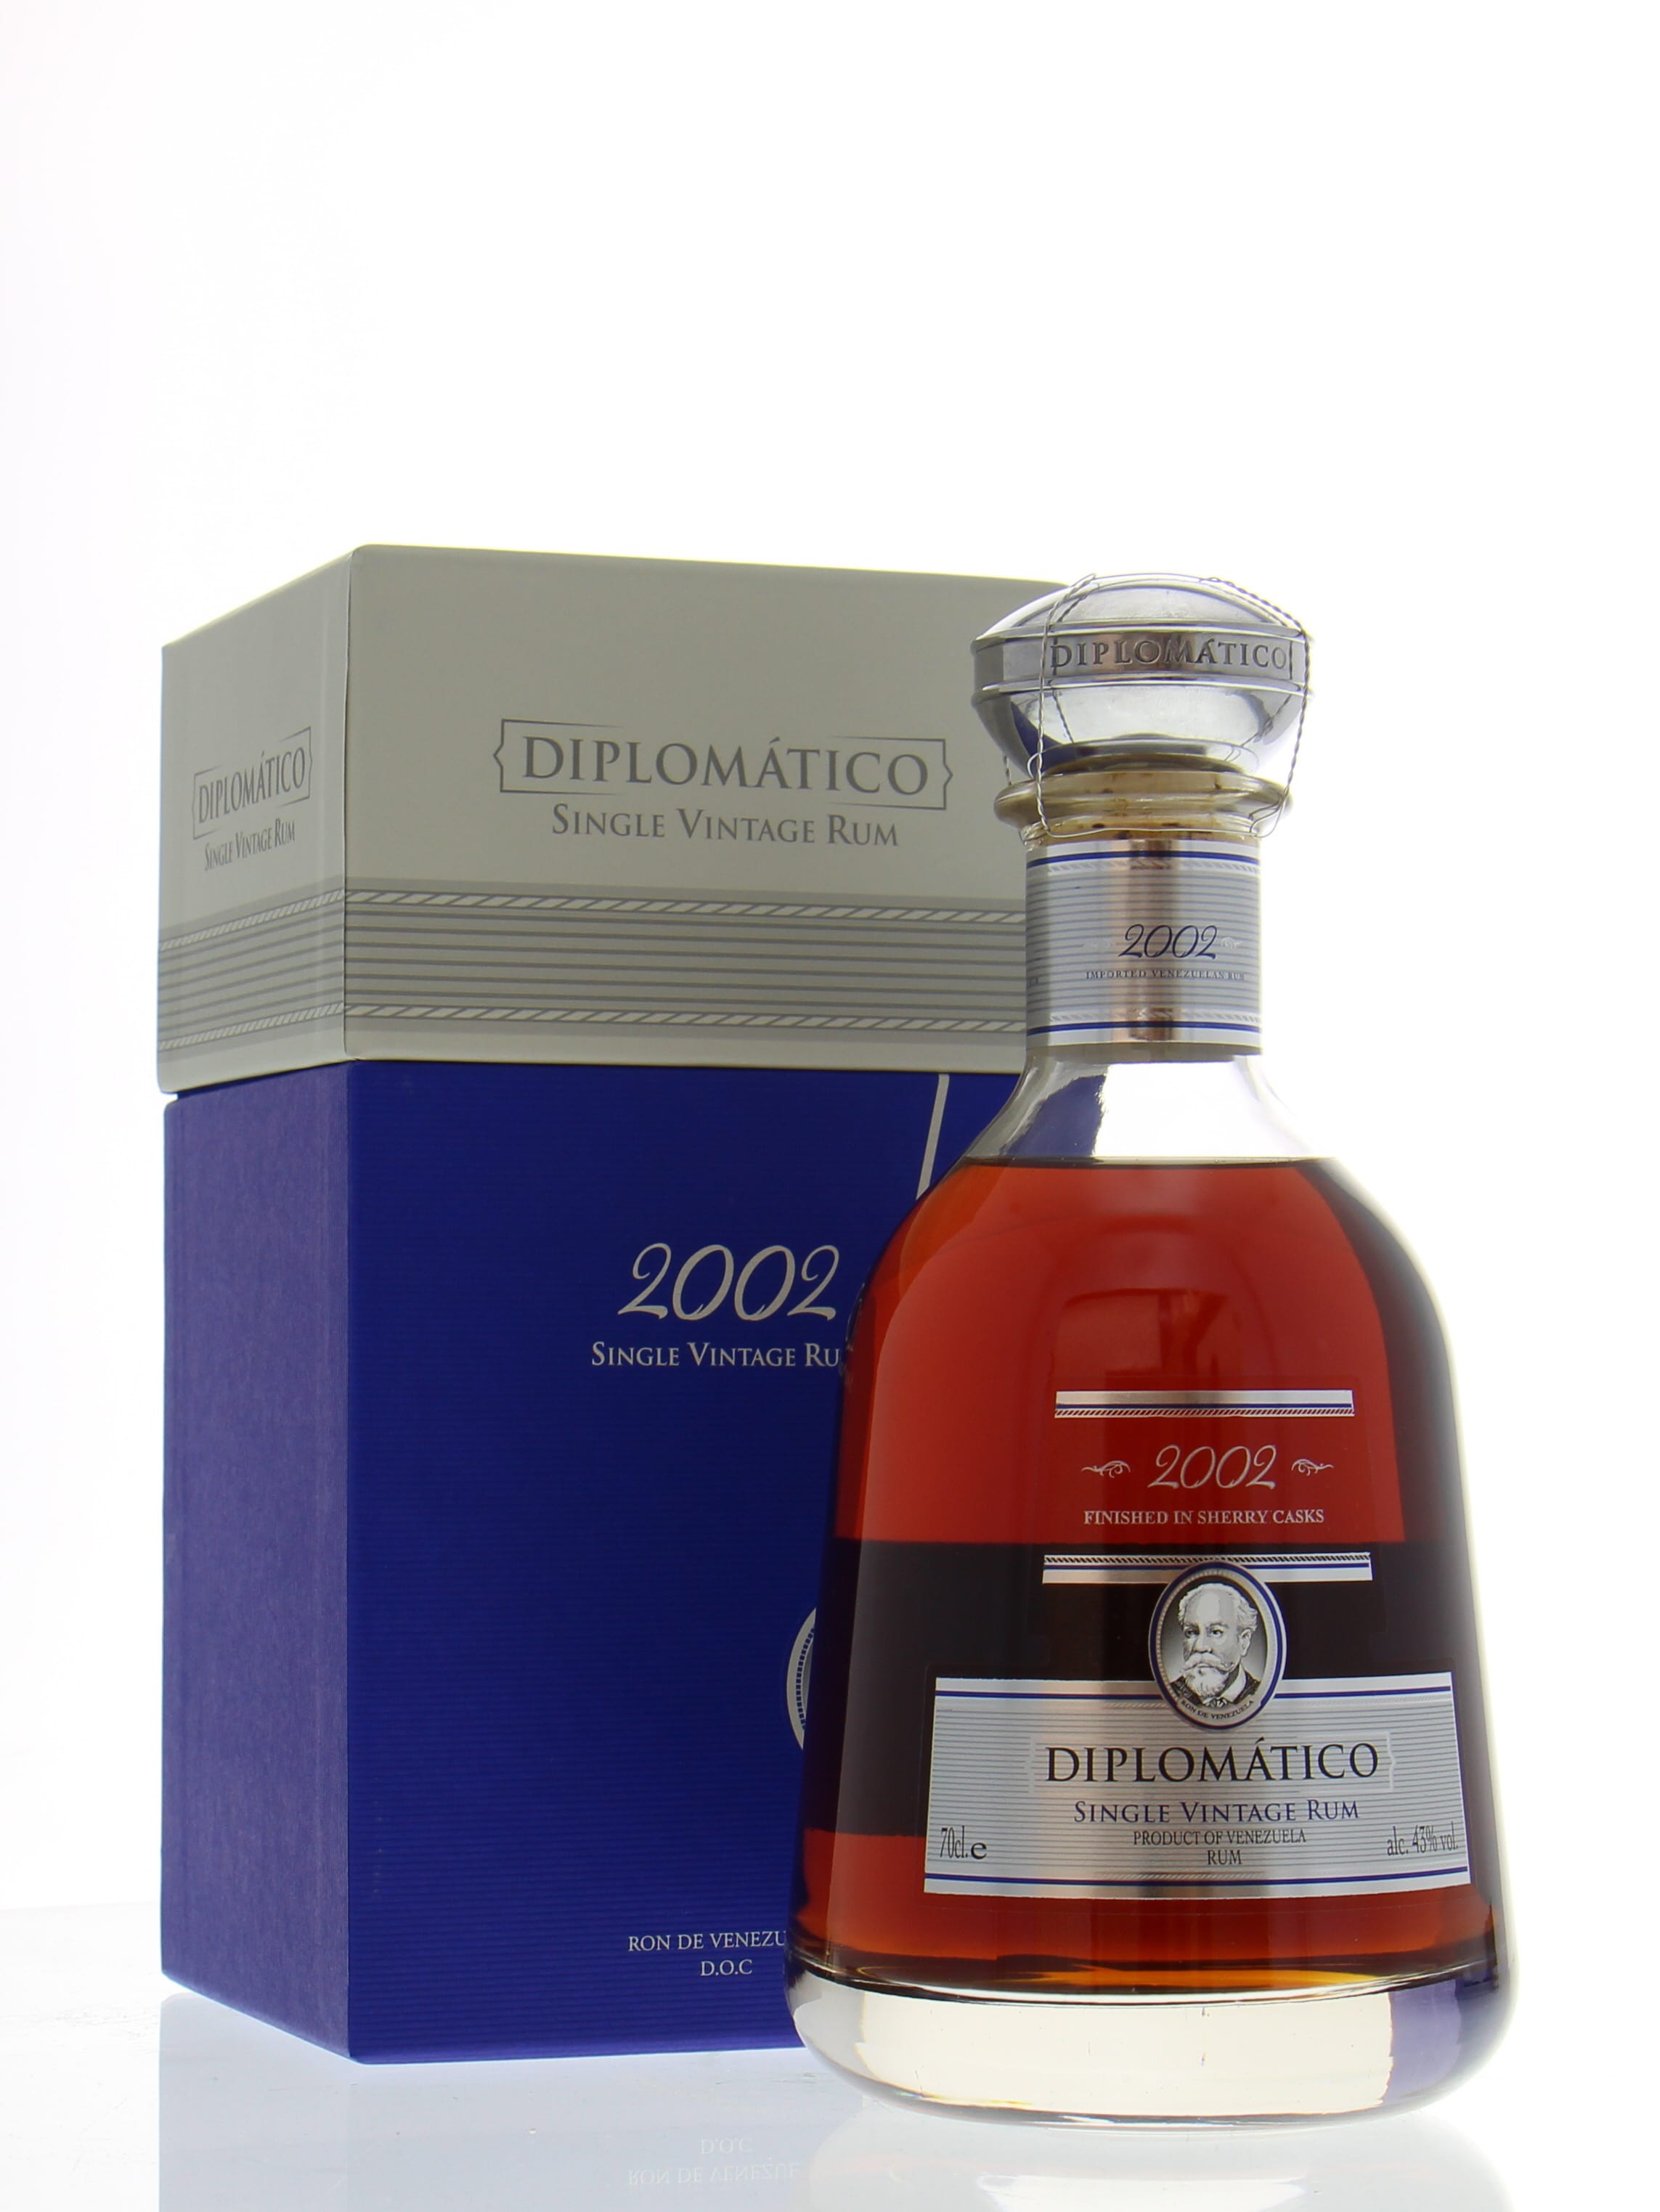 Diplomatico - Single Vintage Rum Sherry Cask Finish 2002 43% 2002 In Original Carton